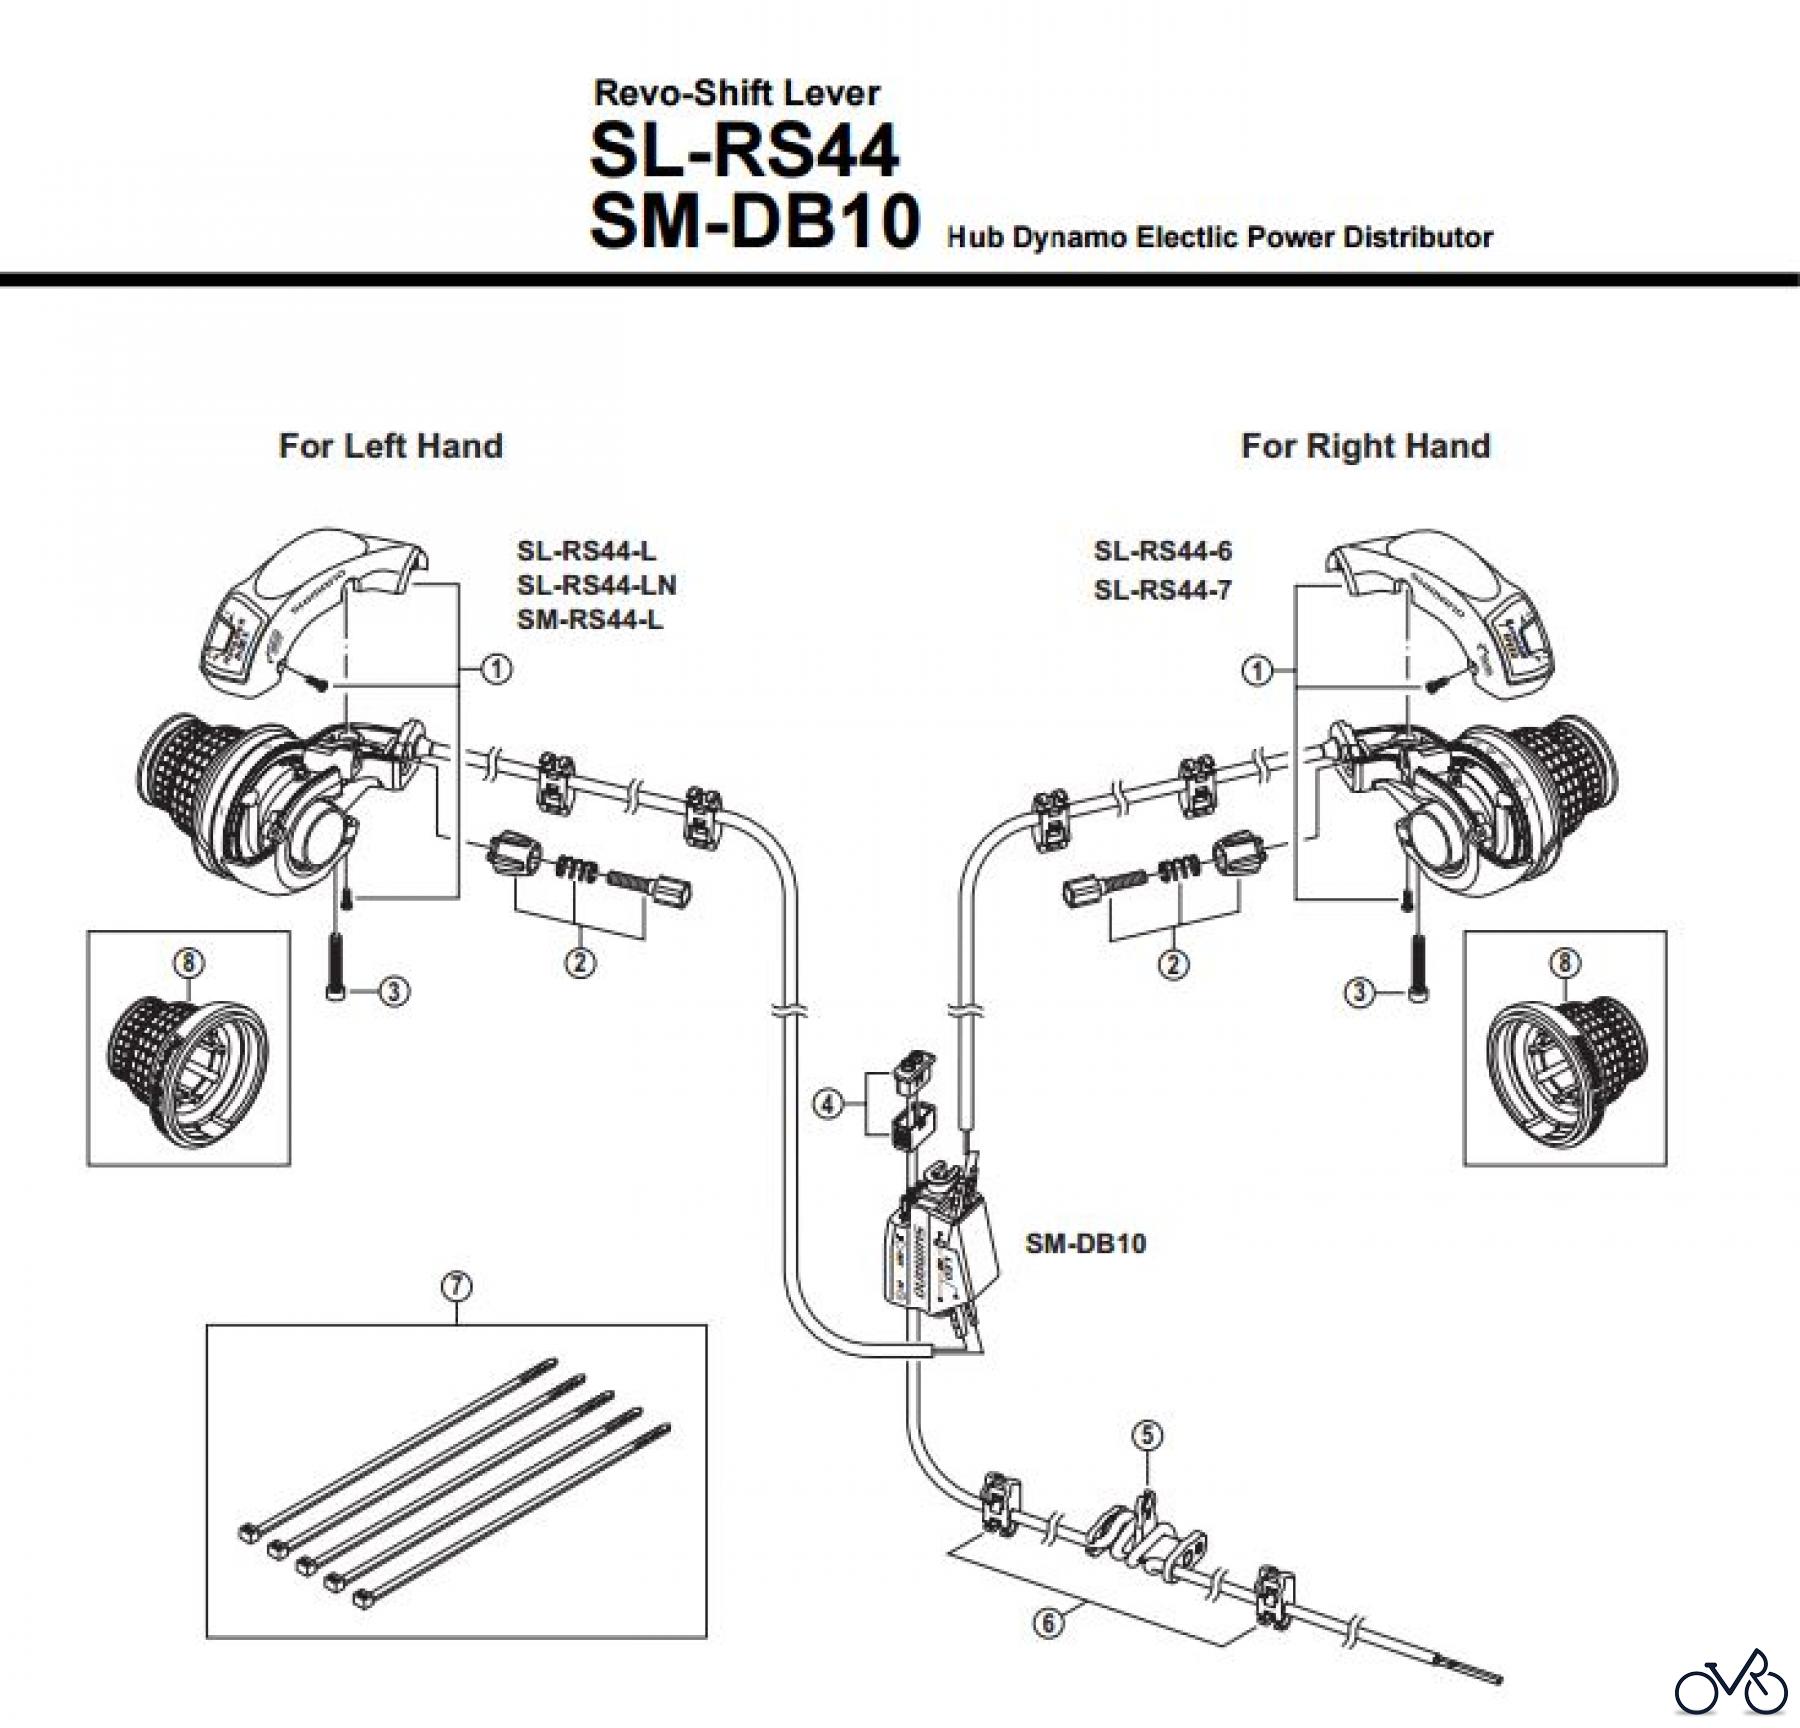  Shimano SL Shift Lever - Schalthebel SL-RS44, SM-DB10 -2779A  Revo-Shift Lever Hub Dynamo Electlic Power Distributor